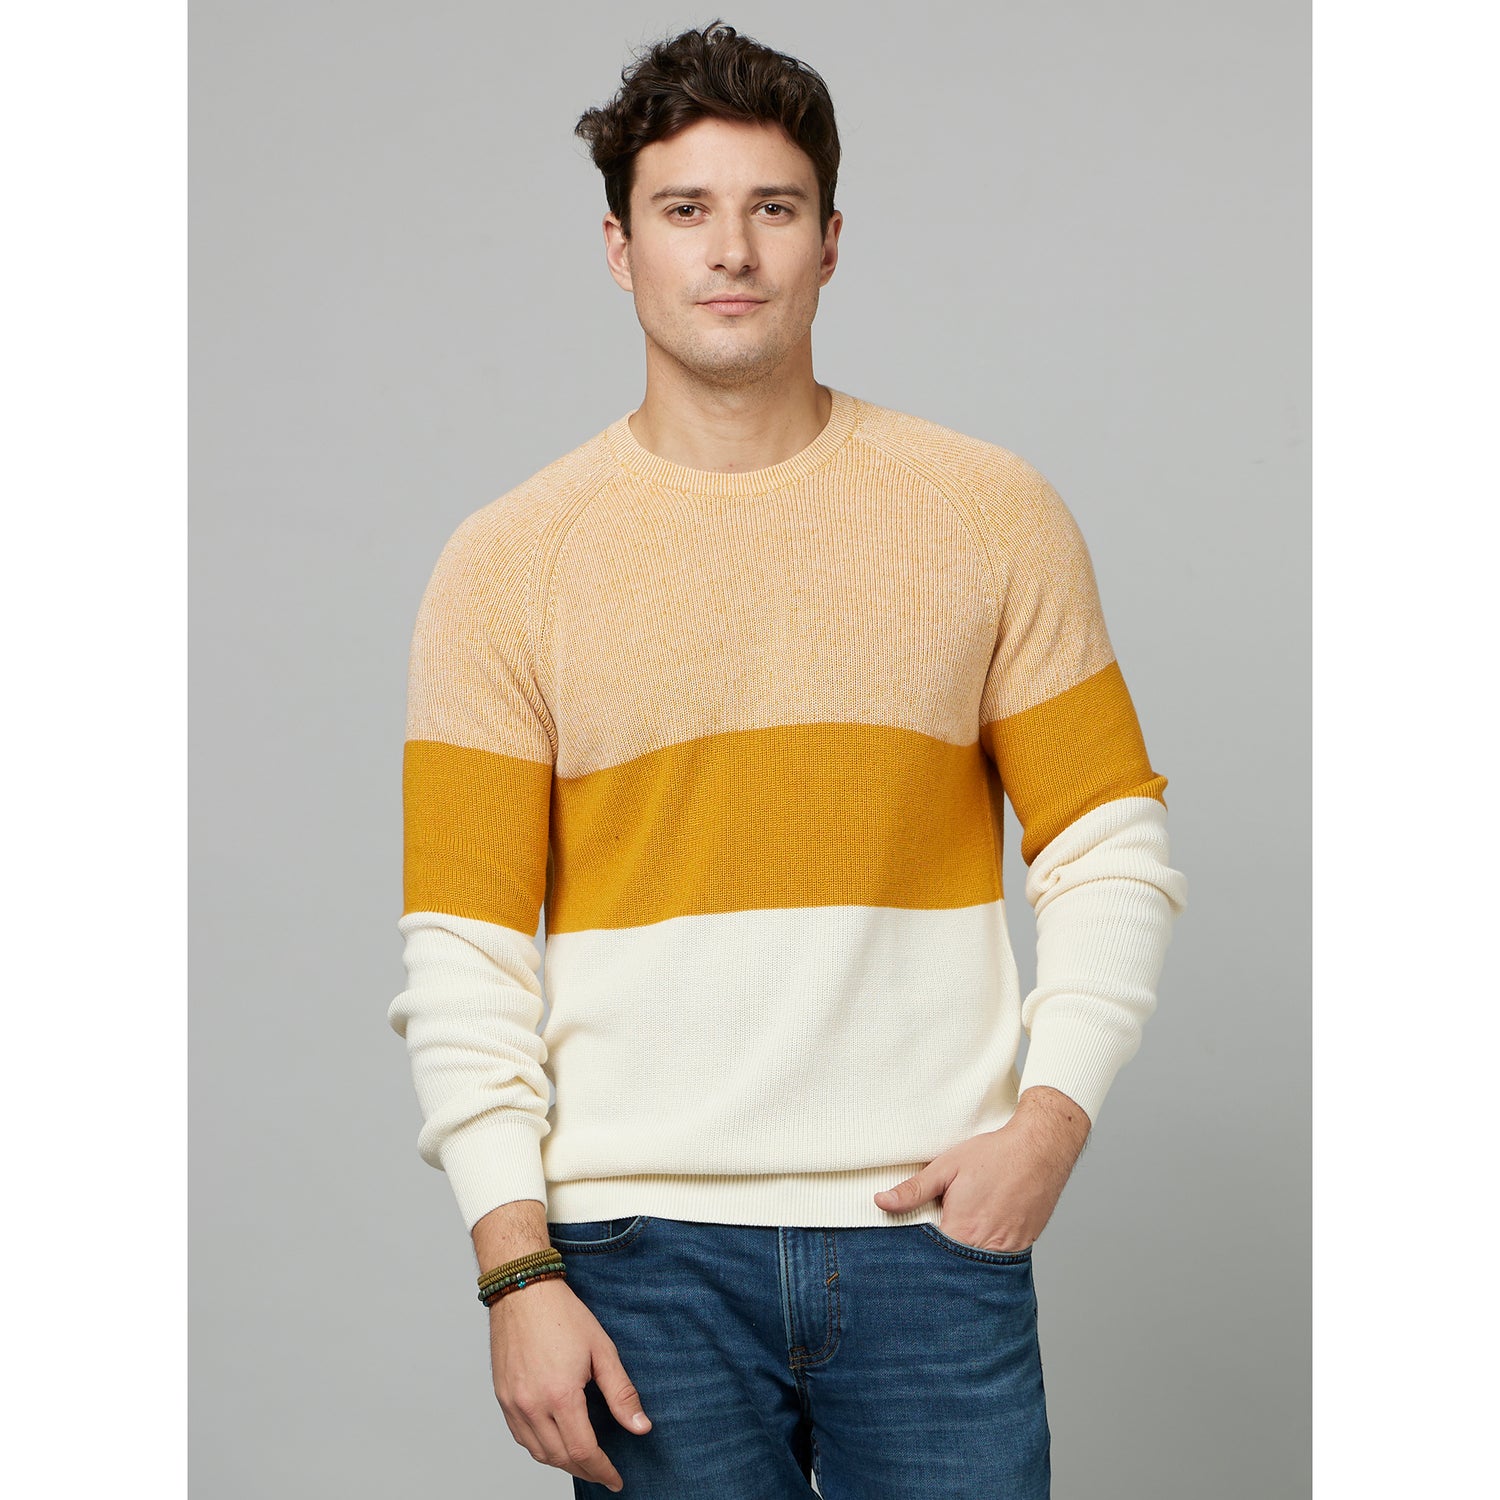 Yellow Colourblocked Full Sleeve Knitted Pullover Sweater (FERIBB)